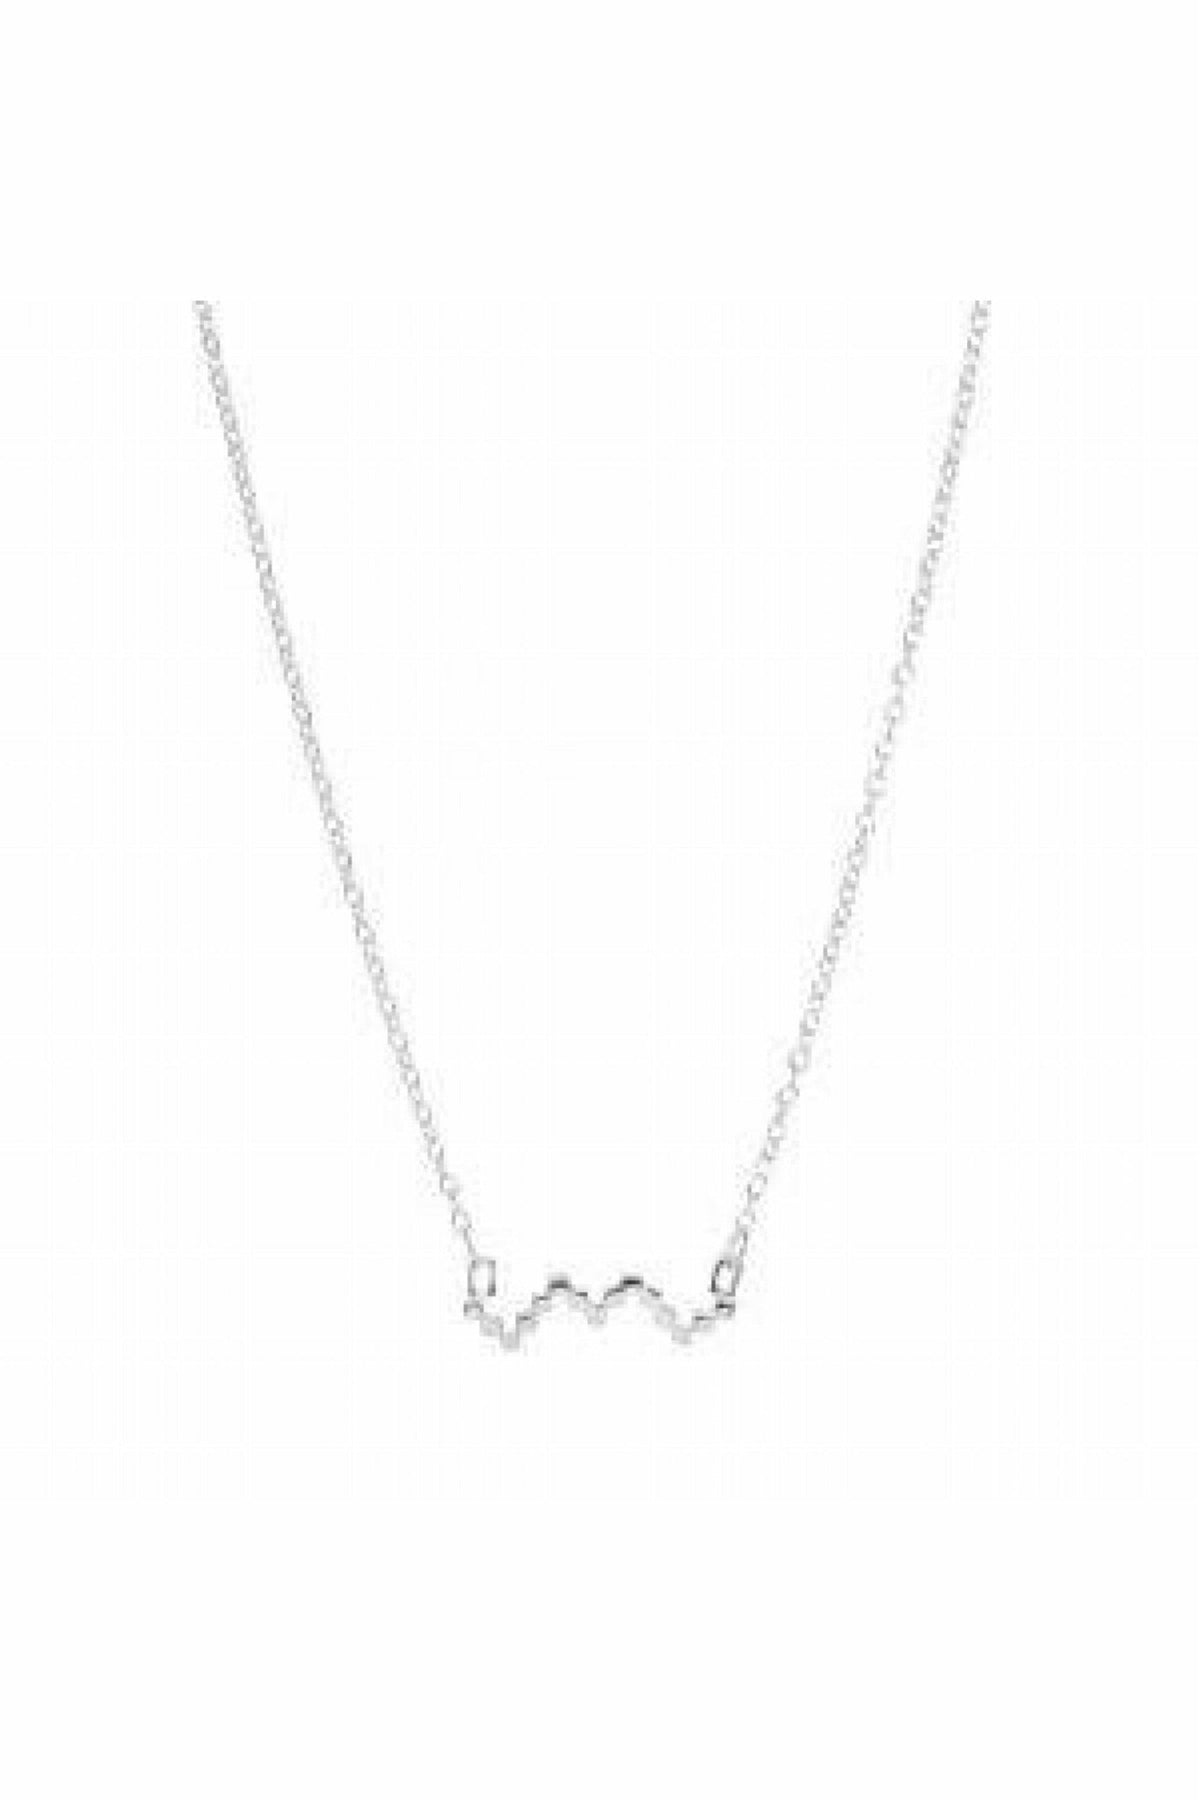 Baori Silhouette Necklace - Silver Jewel Tree London